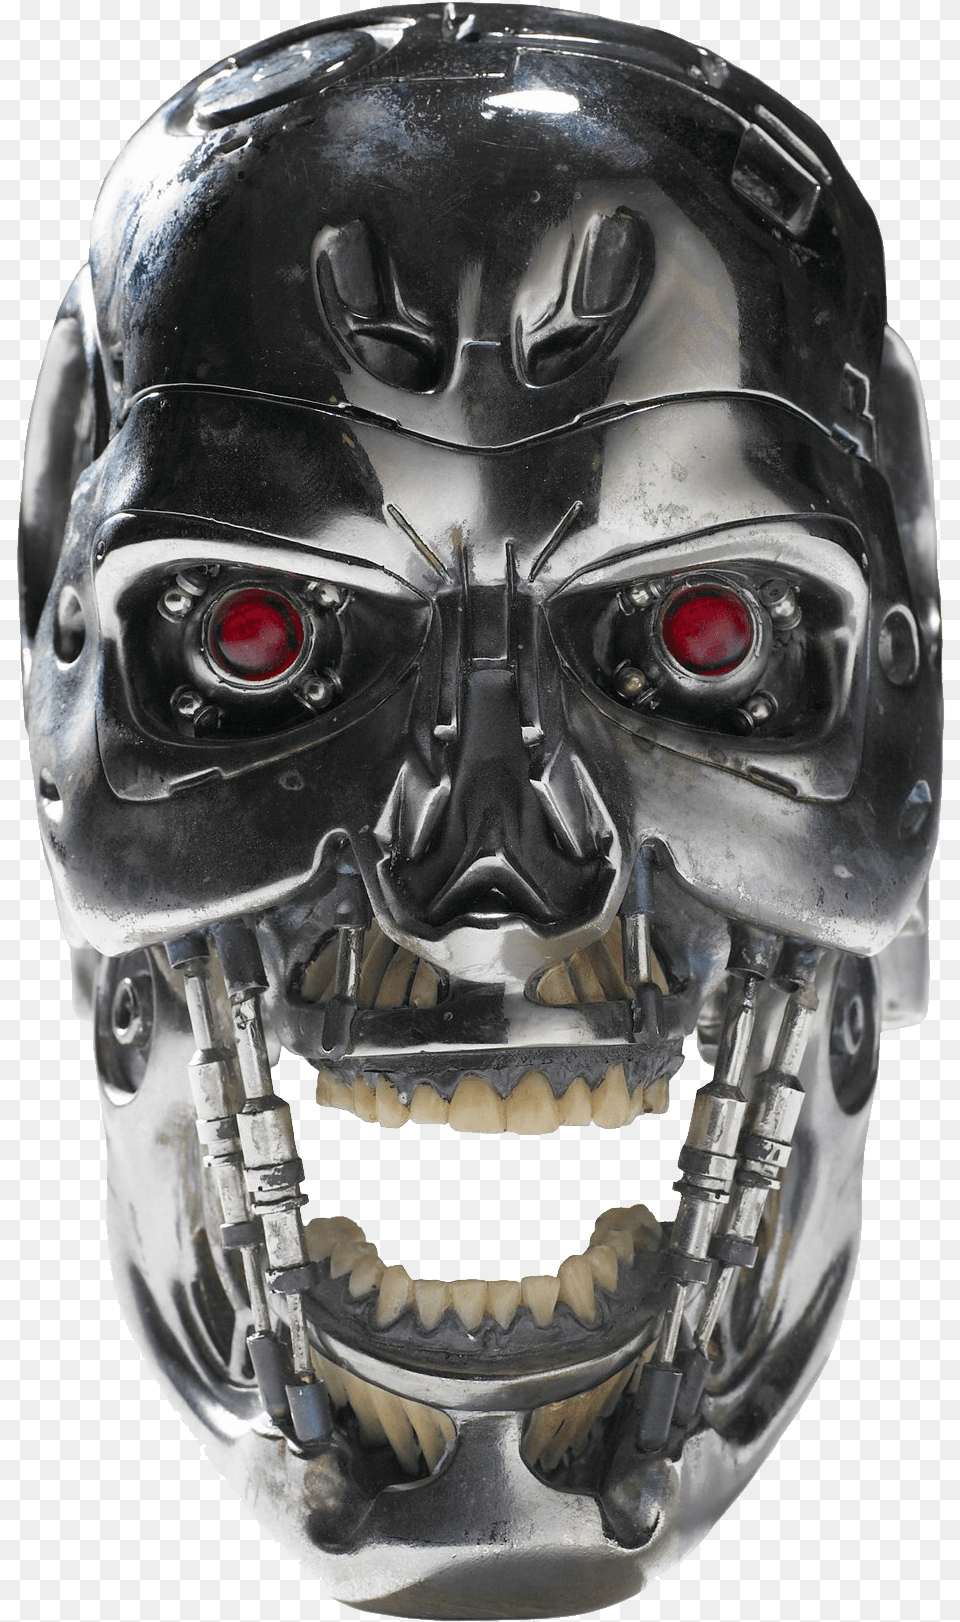 Terminator Skull Terminator Half Face, Helmet, Mask Png Image